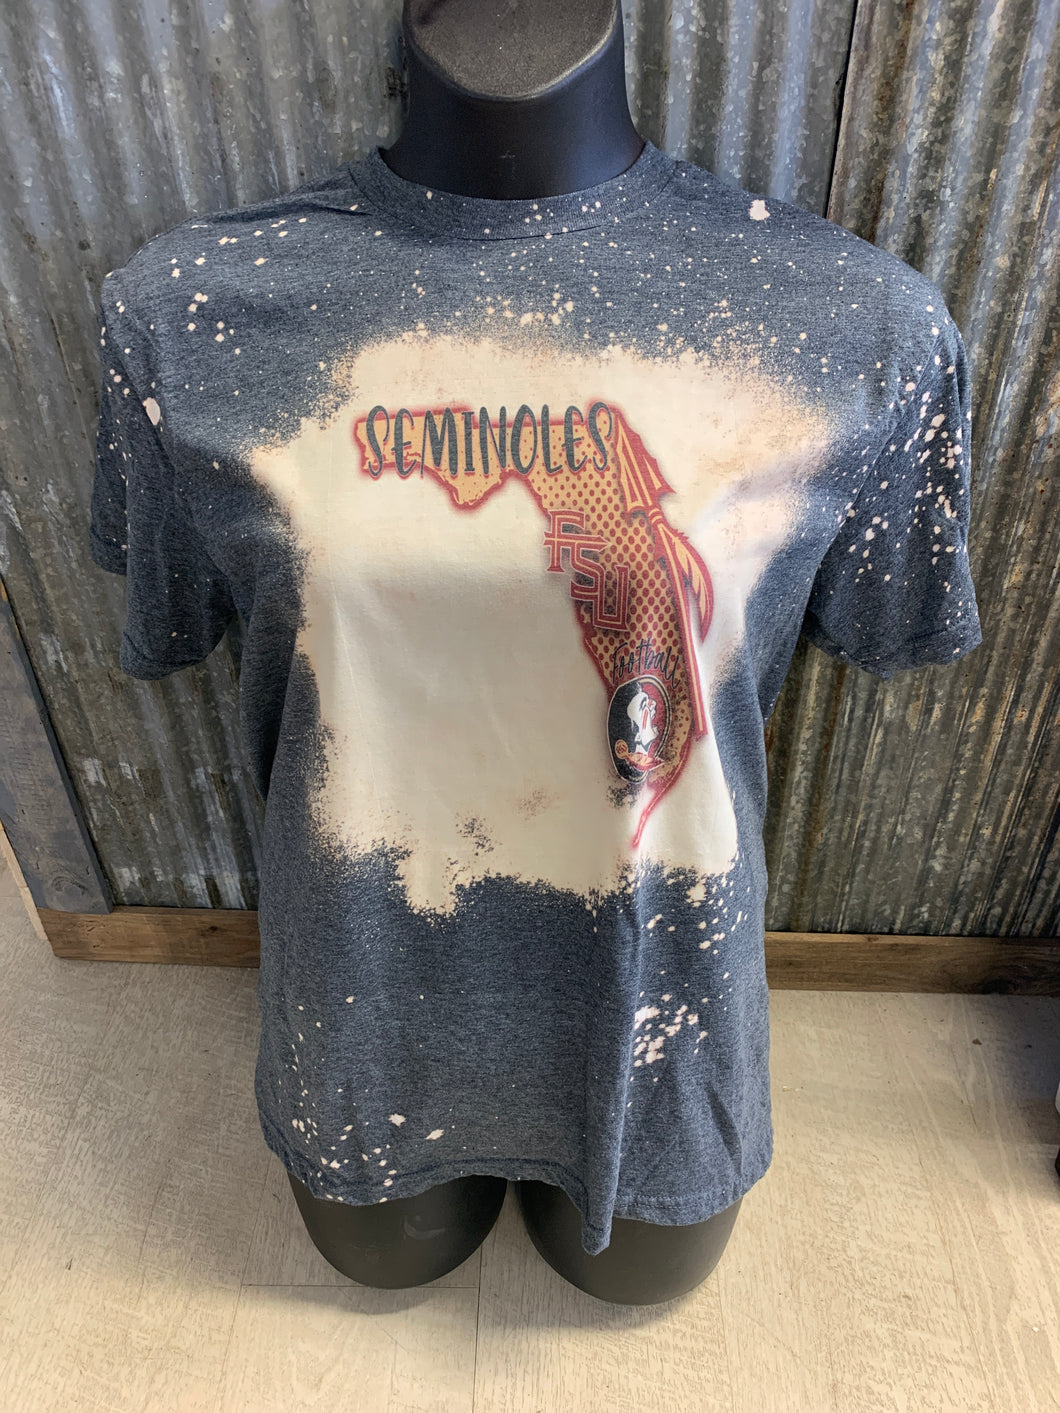 Seminoles bleach t-shirt